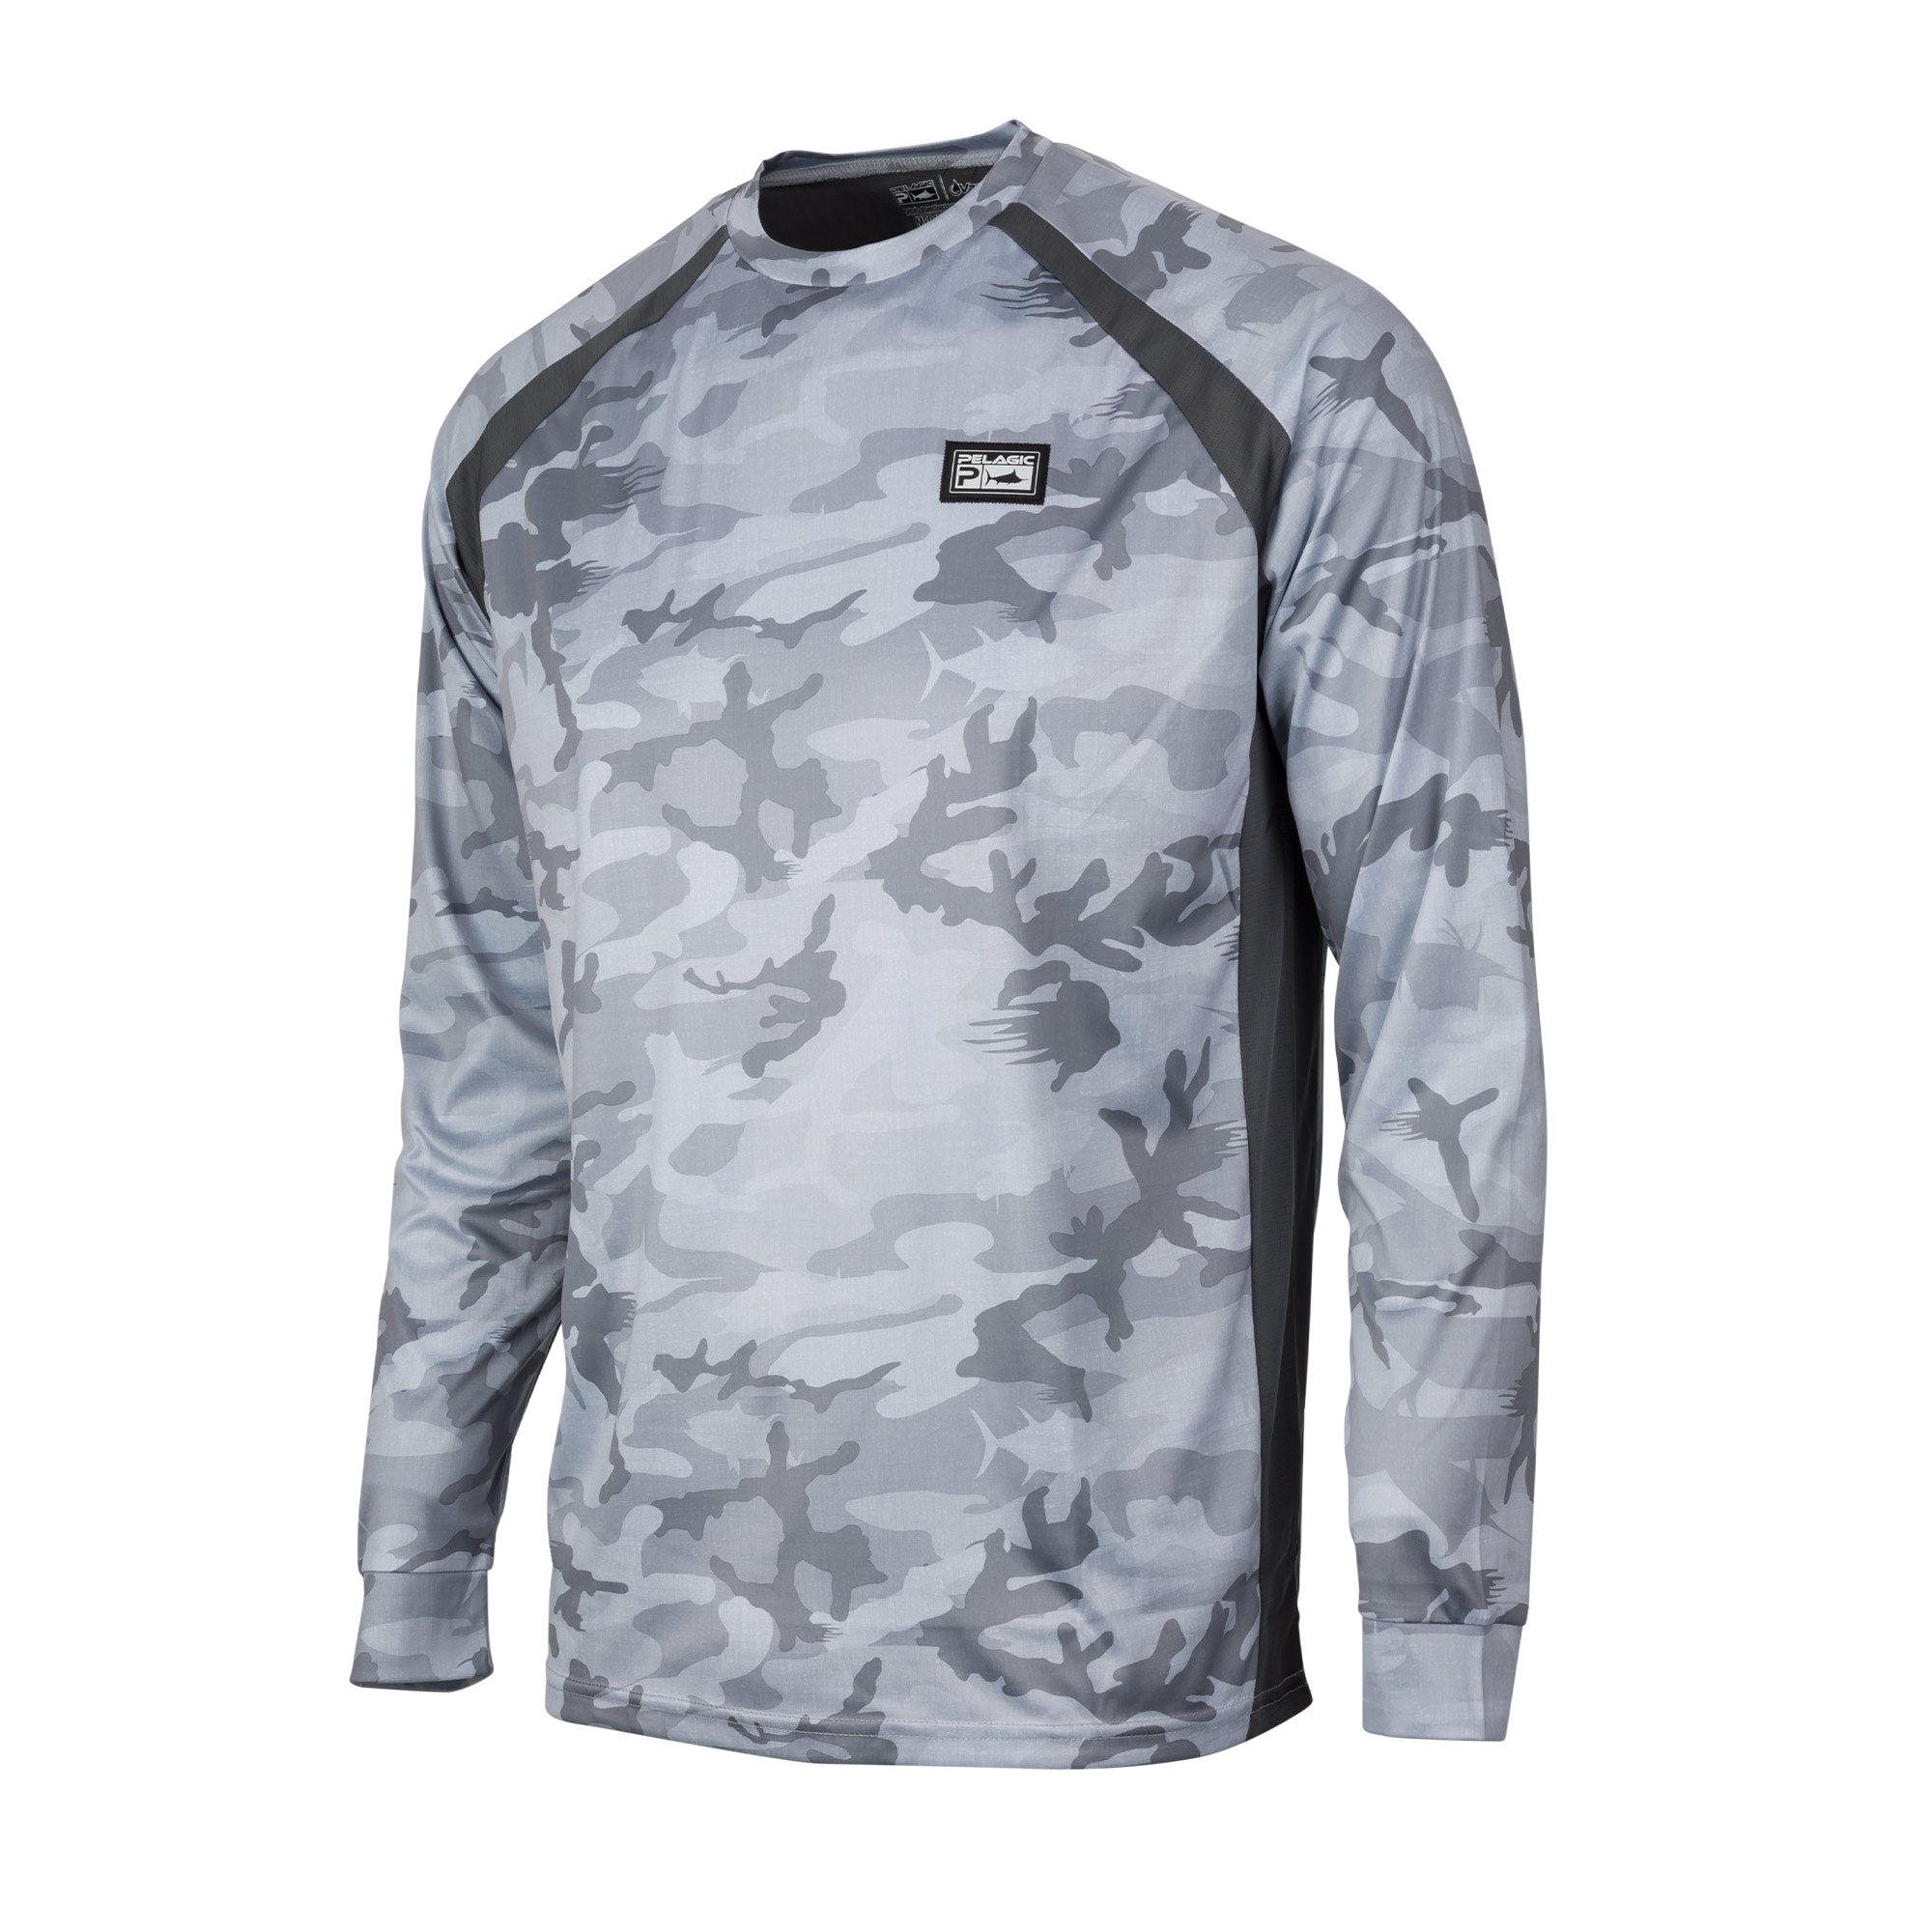 Pelagic Vaportek UV Performance Fishing Shirt - Rok Max